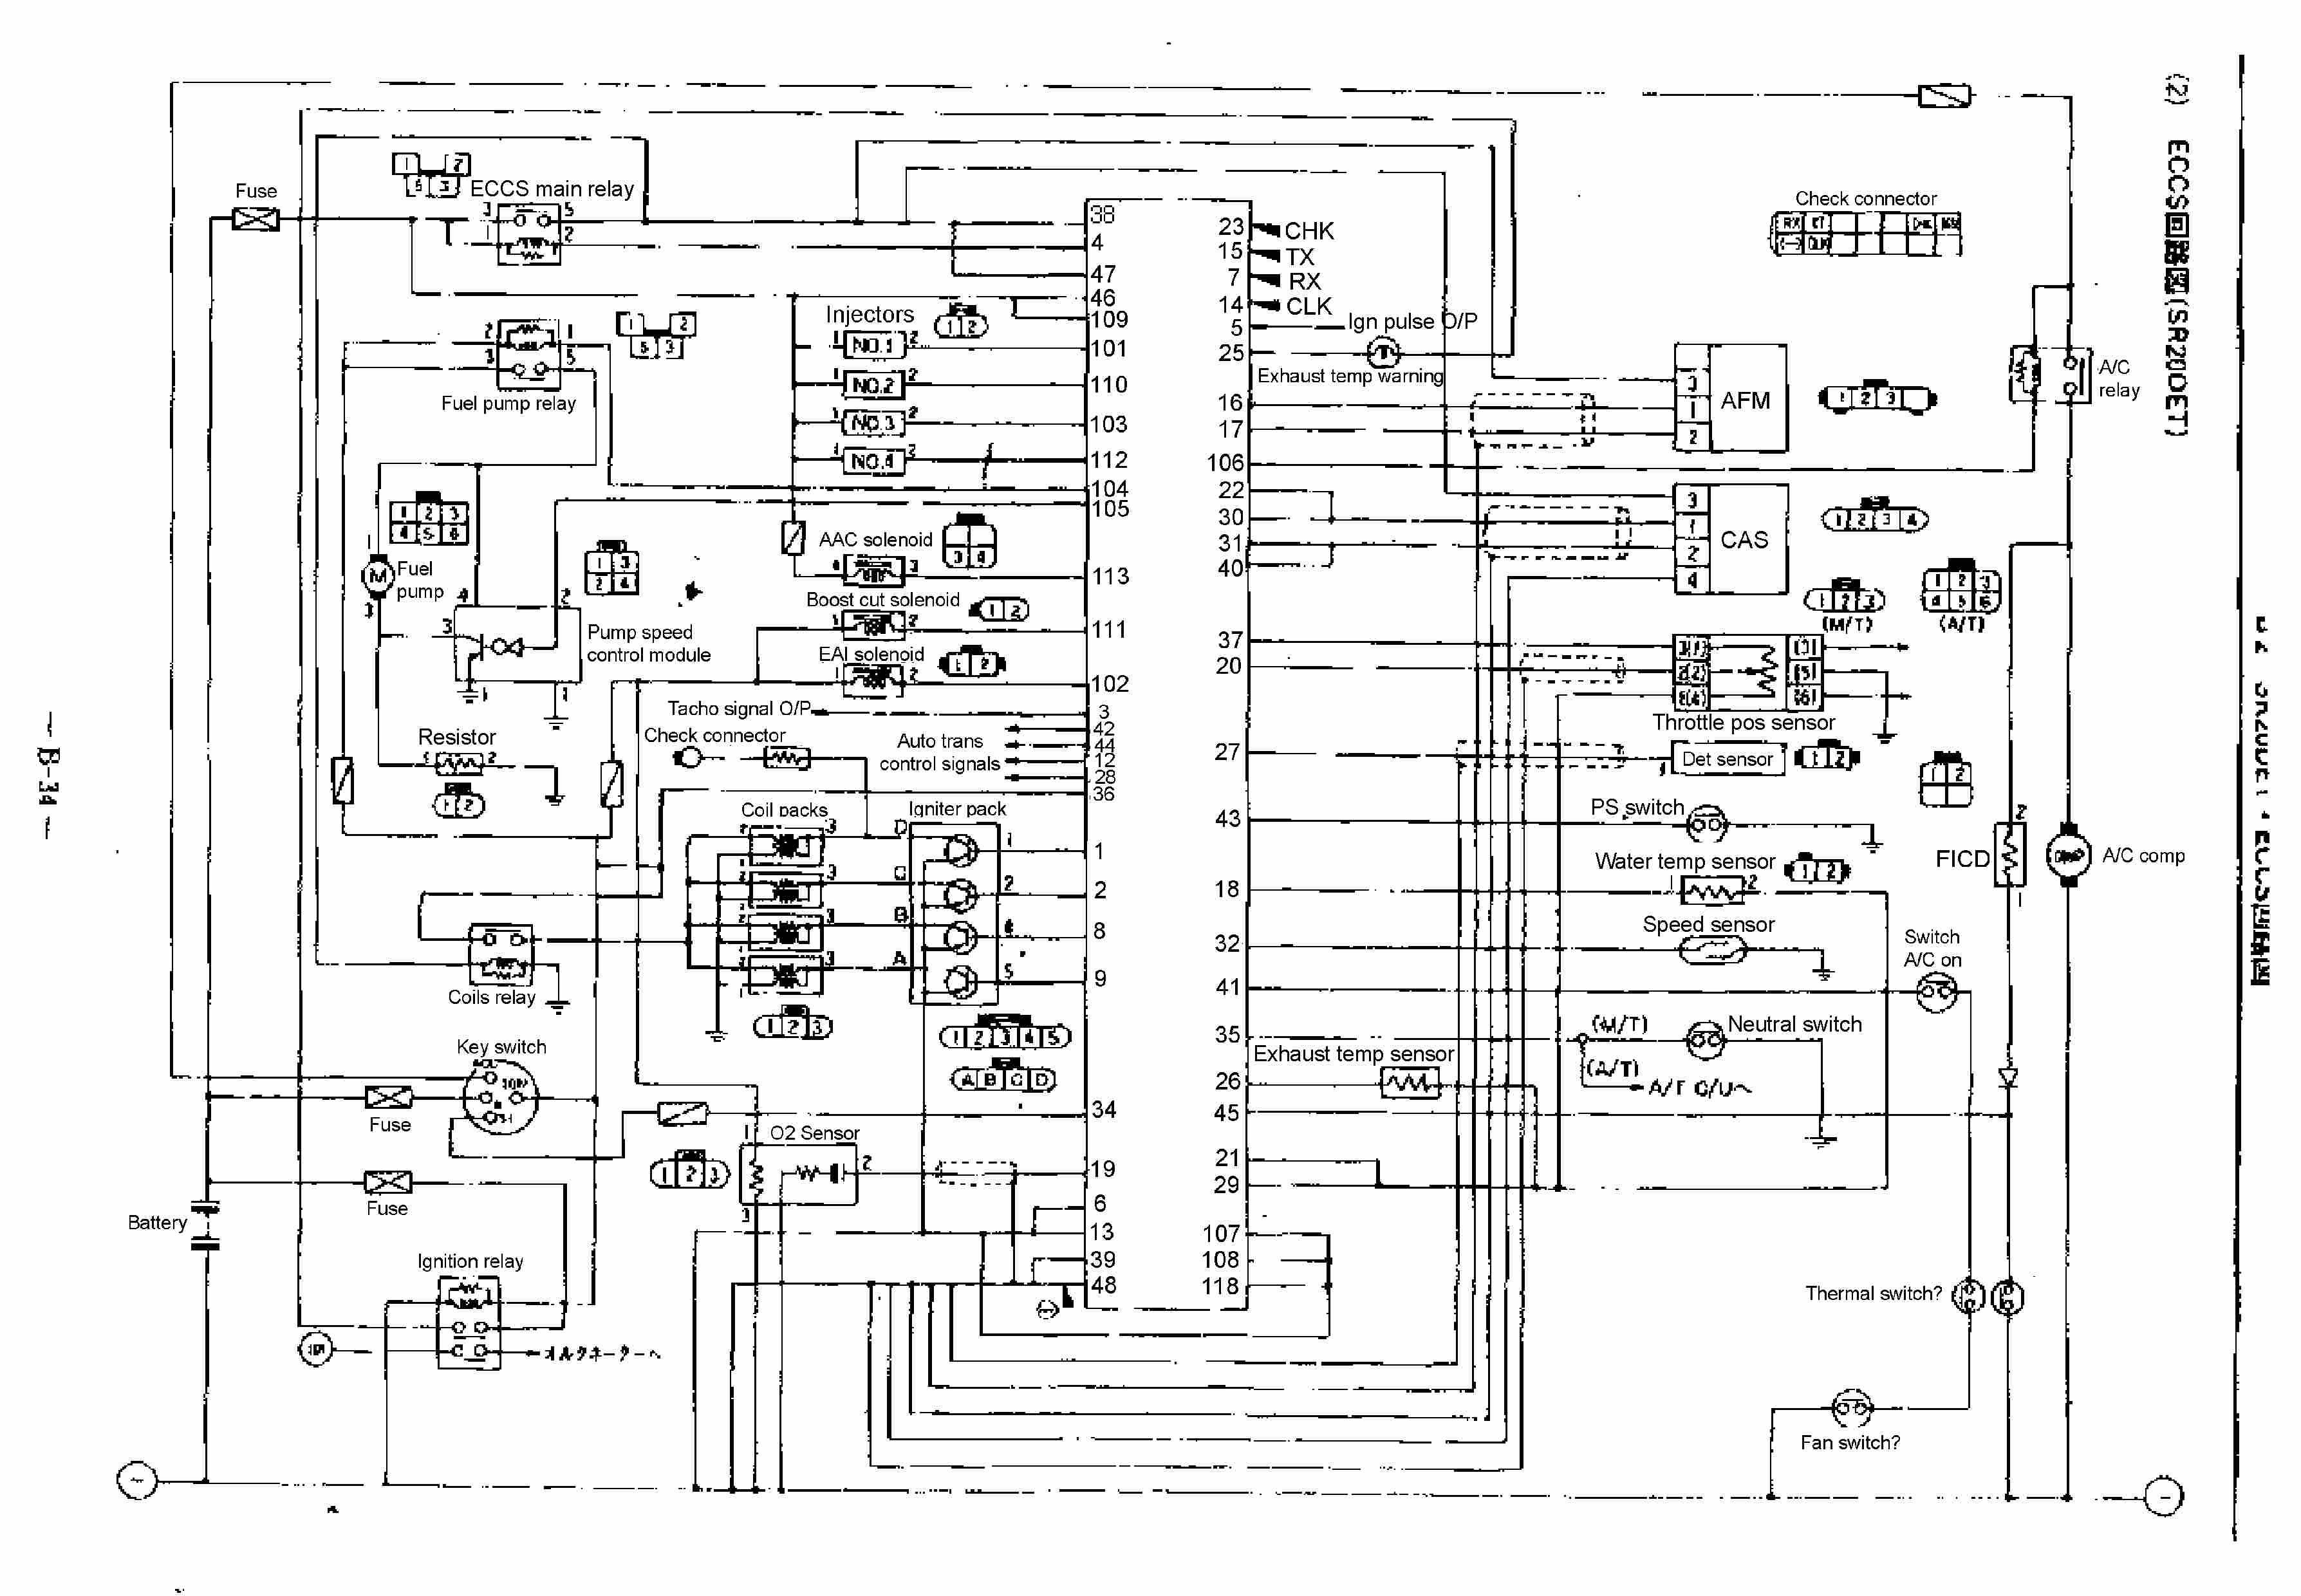 Wiring Diagram for Cars Alternator Wiring Diagram Sample Of Wiring Diagram for Cars